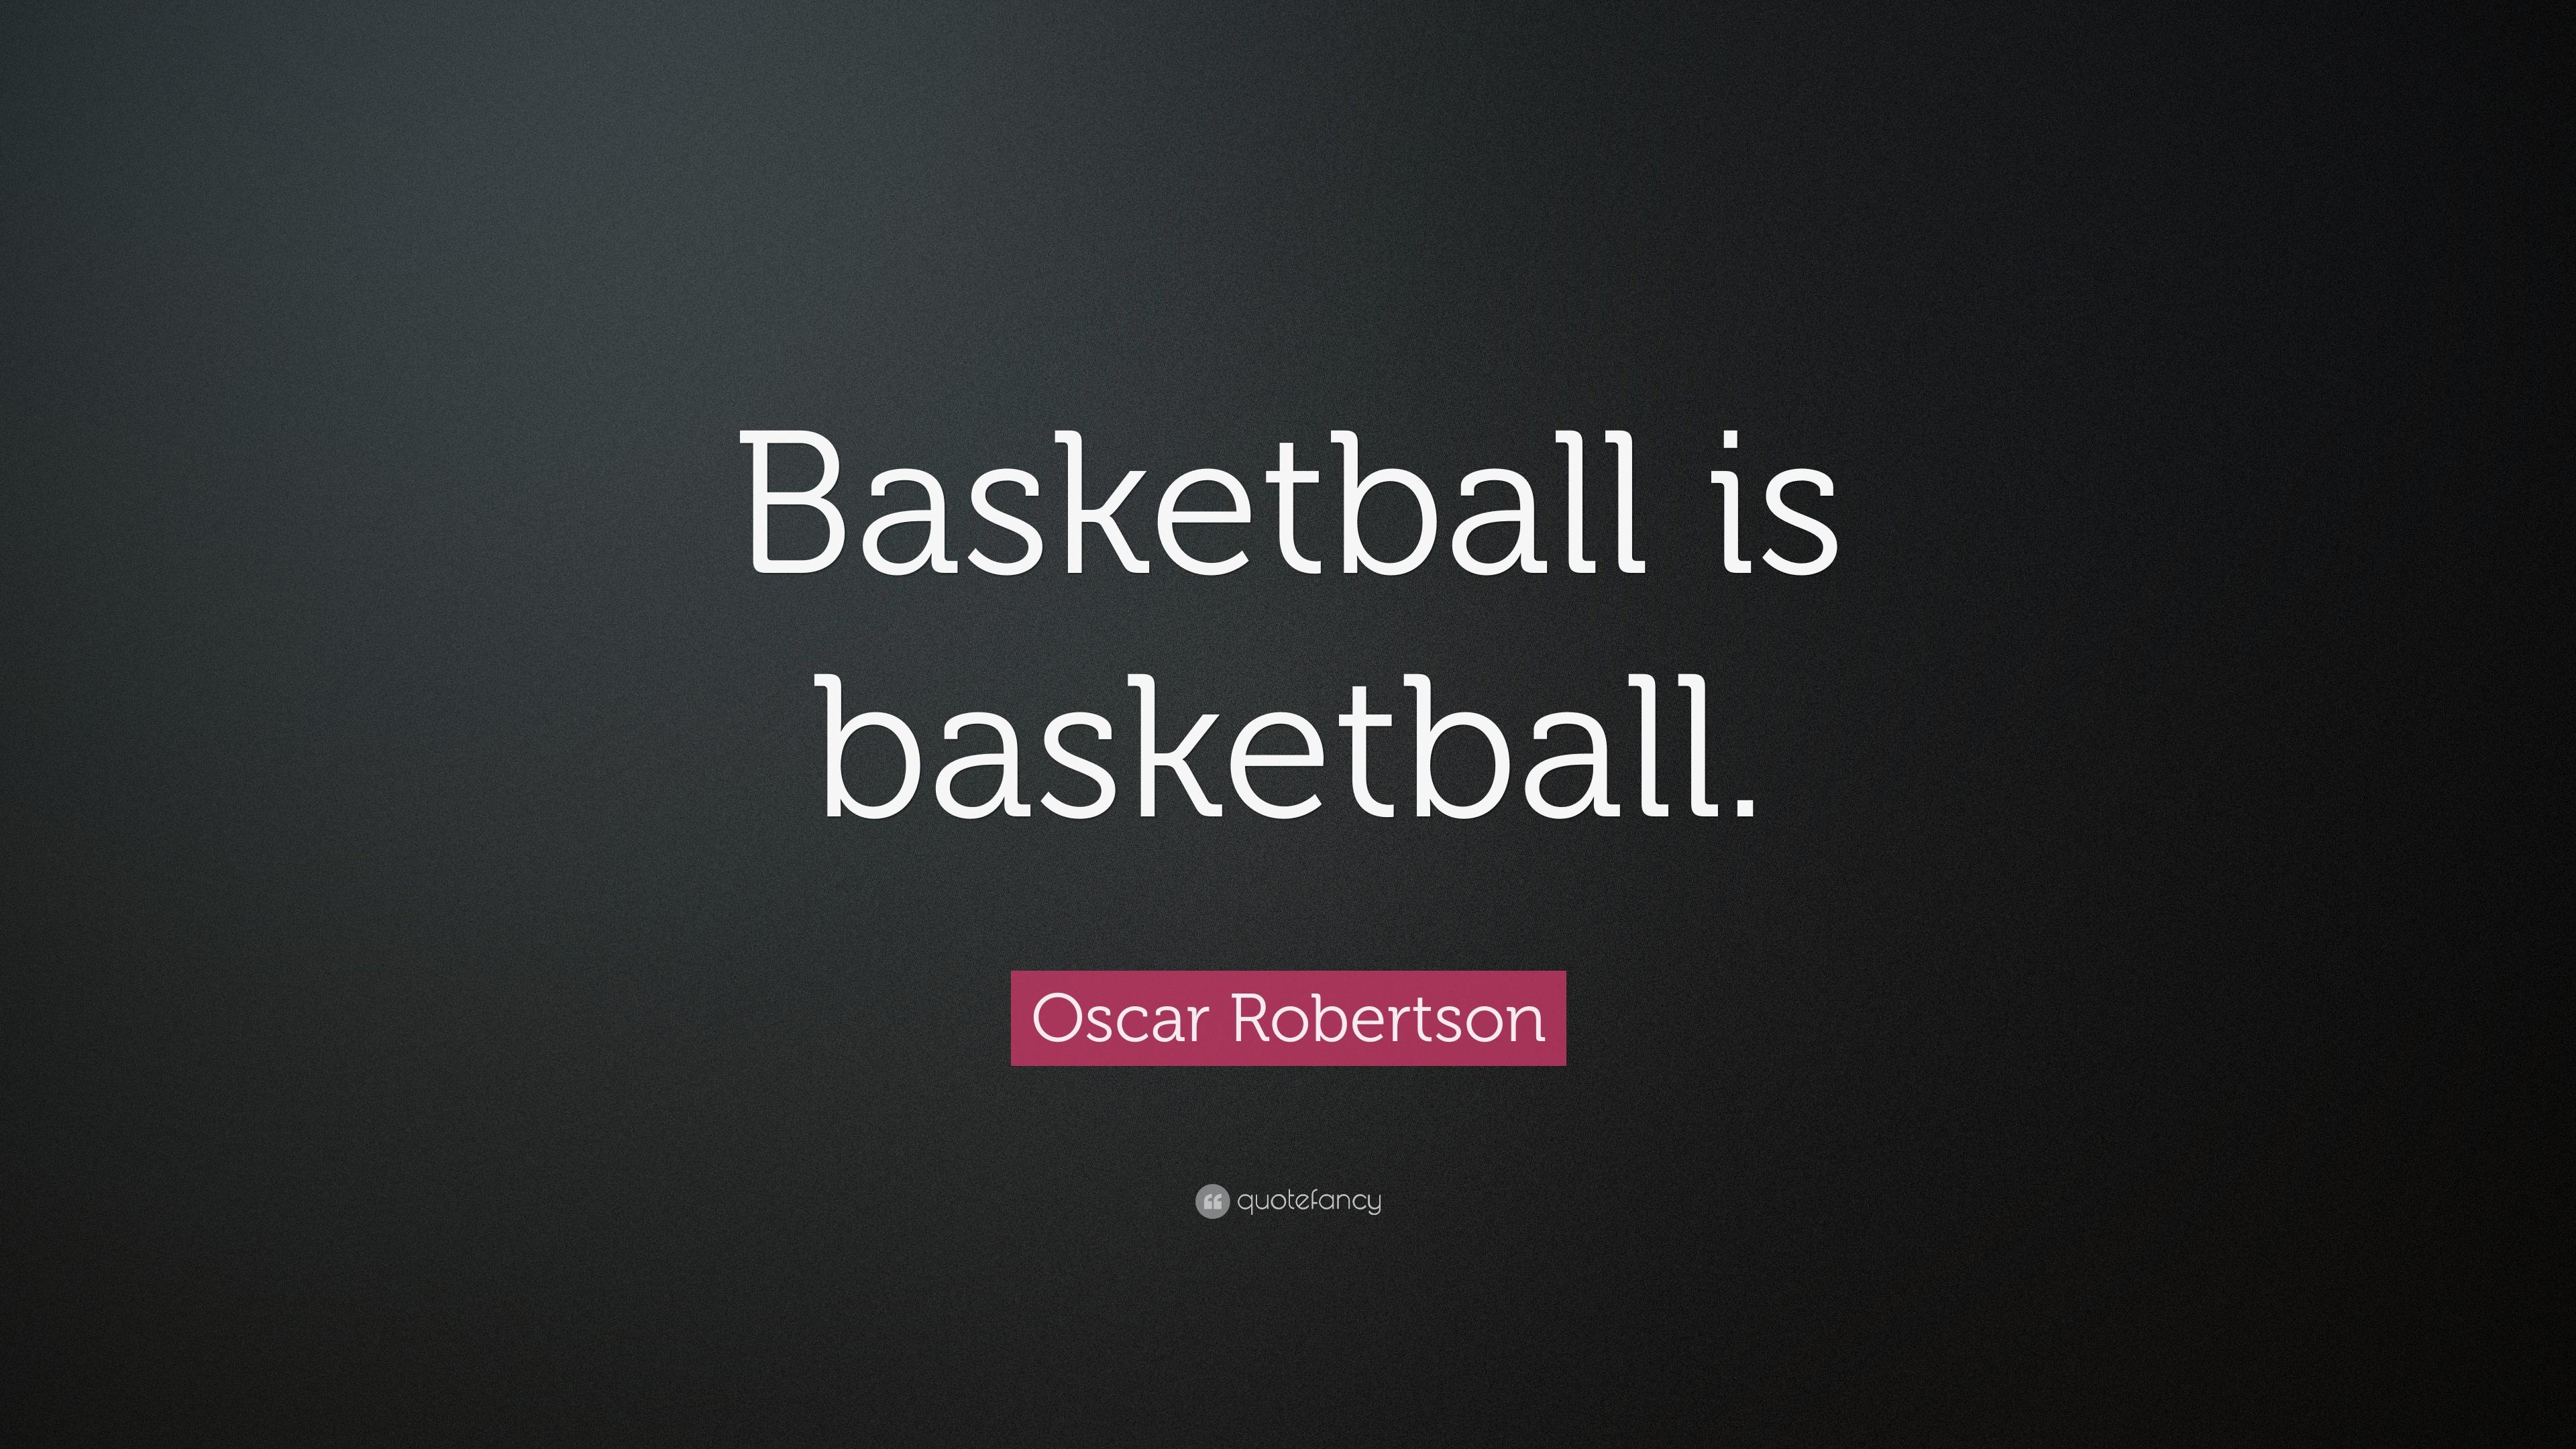 Oscar Robertson Quote: “Basketball is basketball.” 7 wallpaper